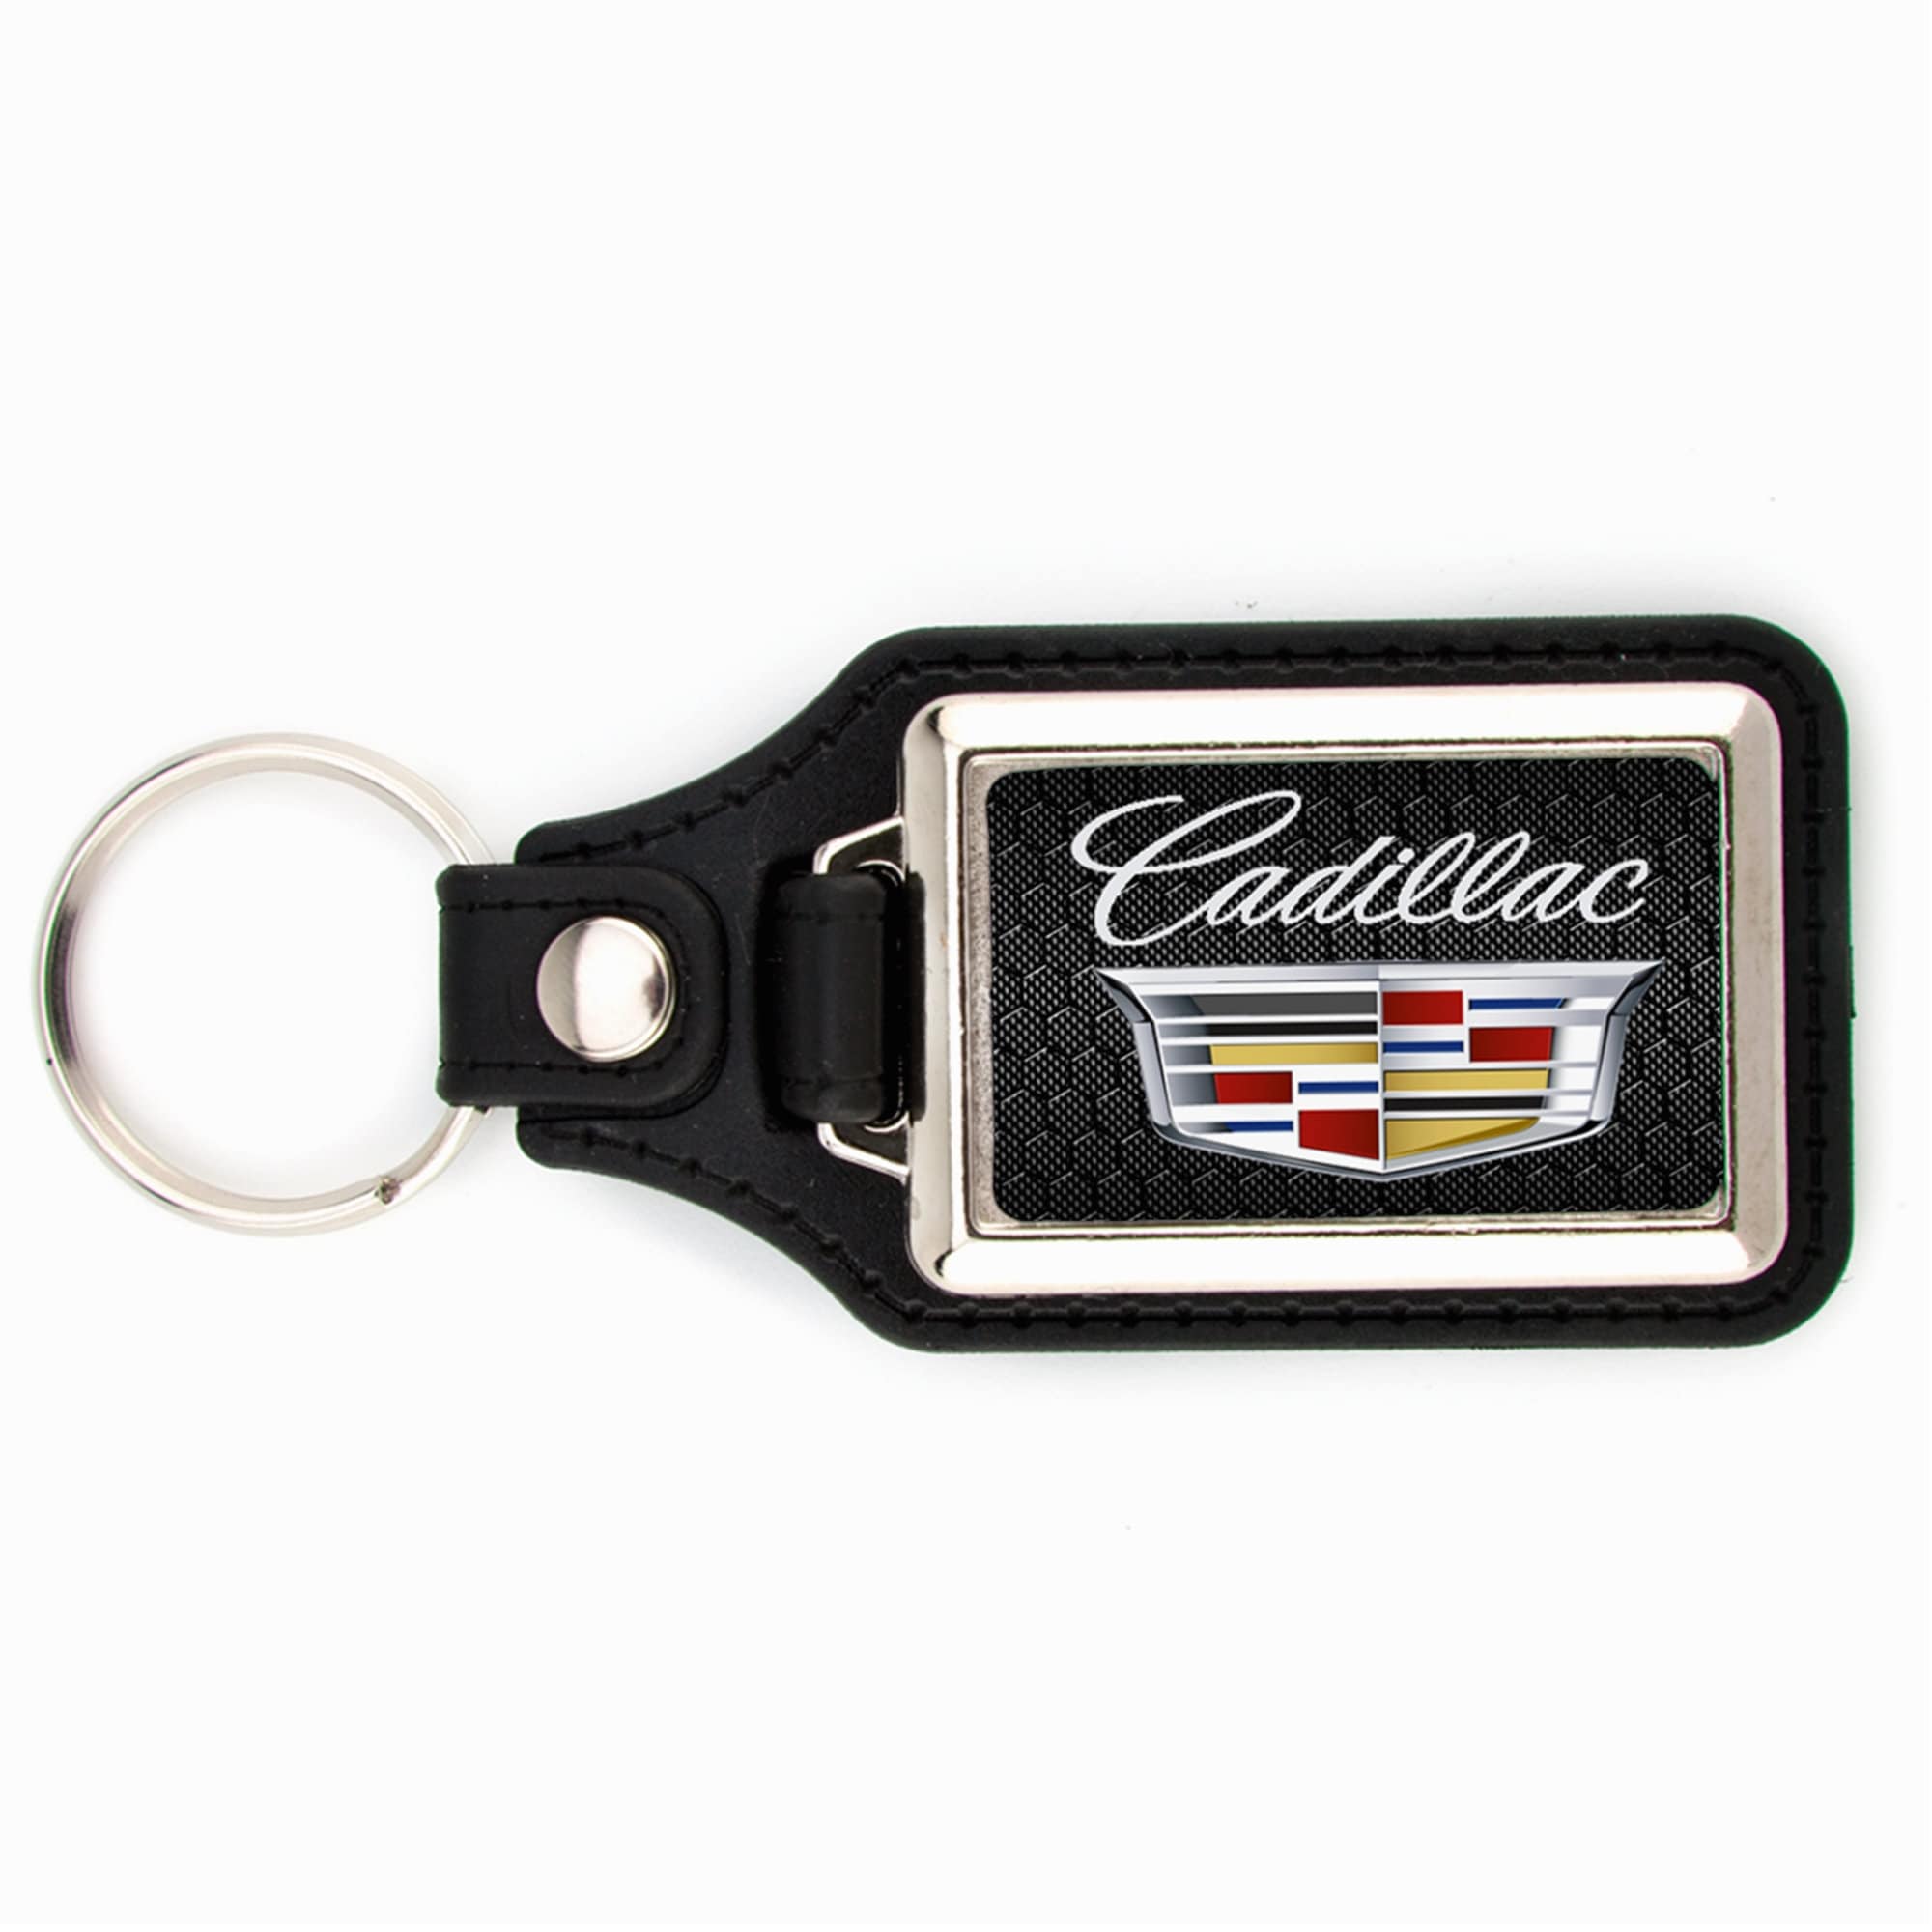 Cadillac Key Ring Chain Keyfob Car Keychain for ESCALADE ATS XTS CTS SRX Devile